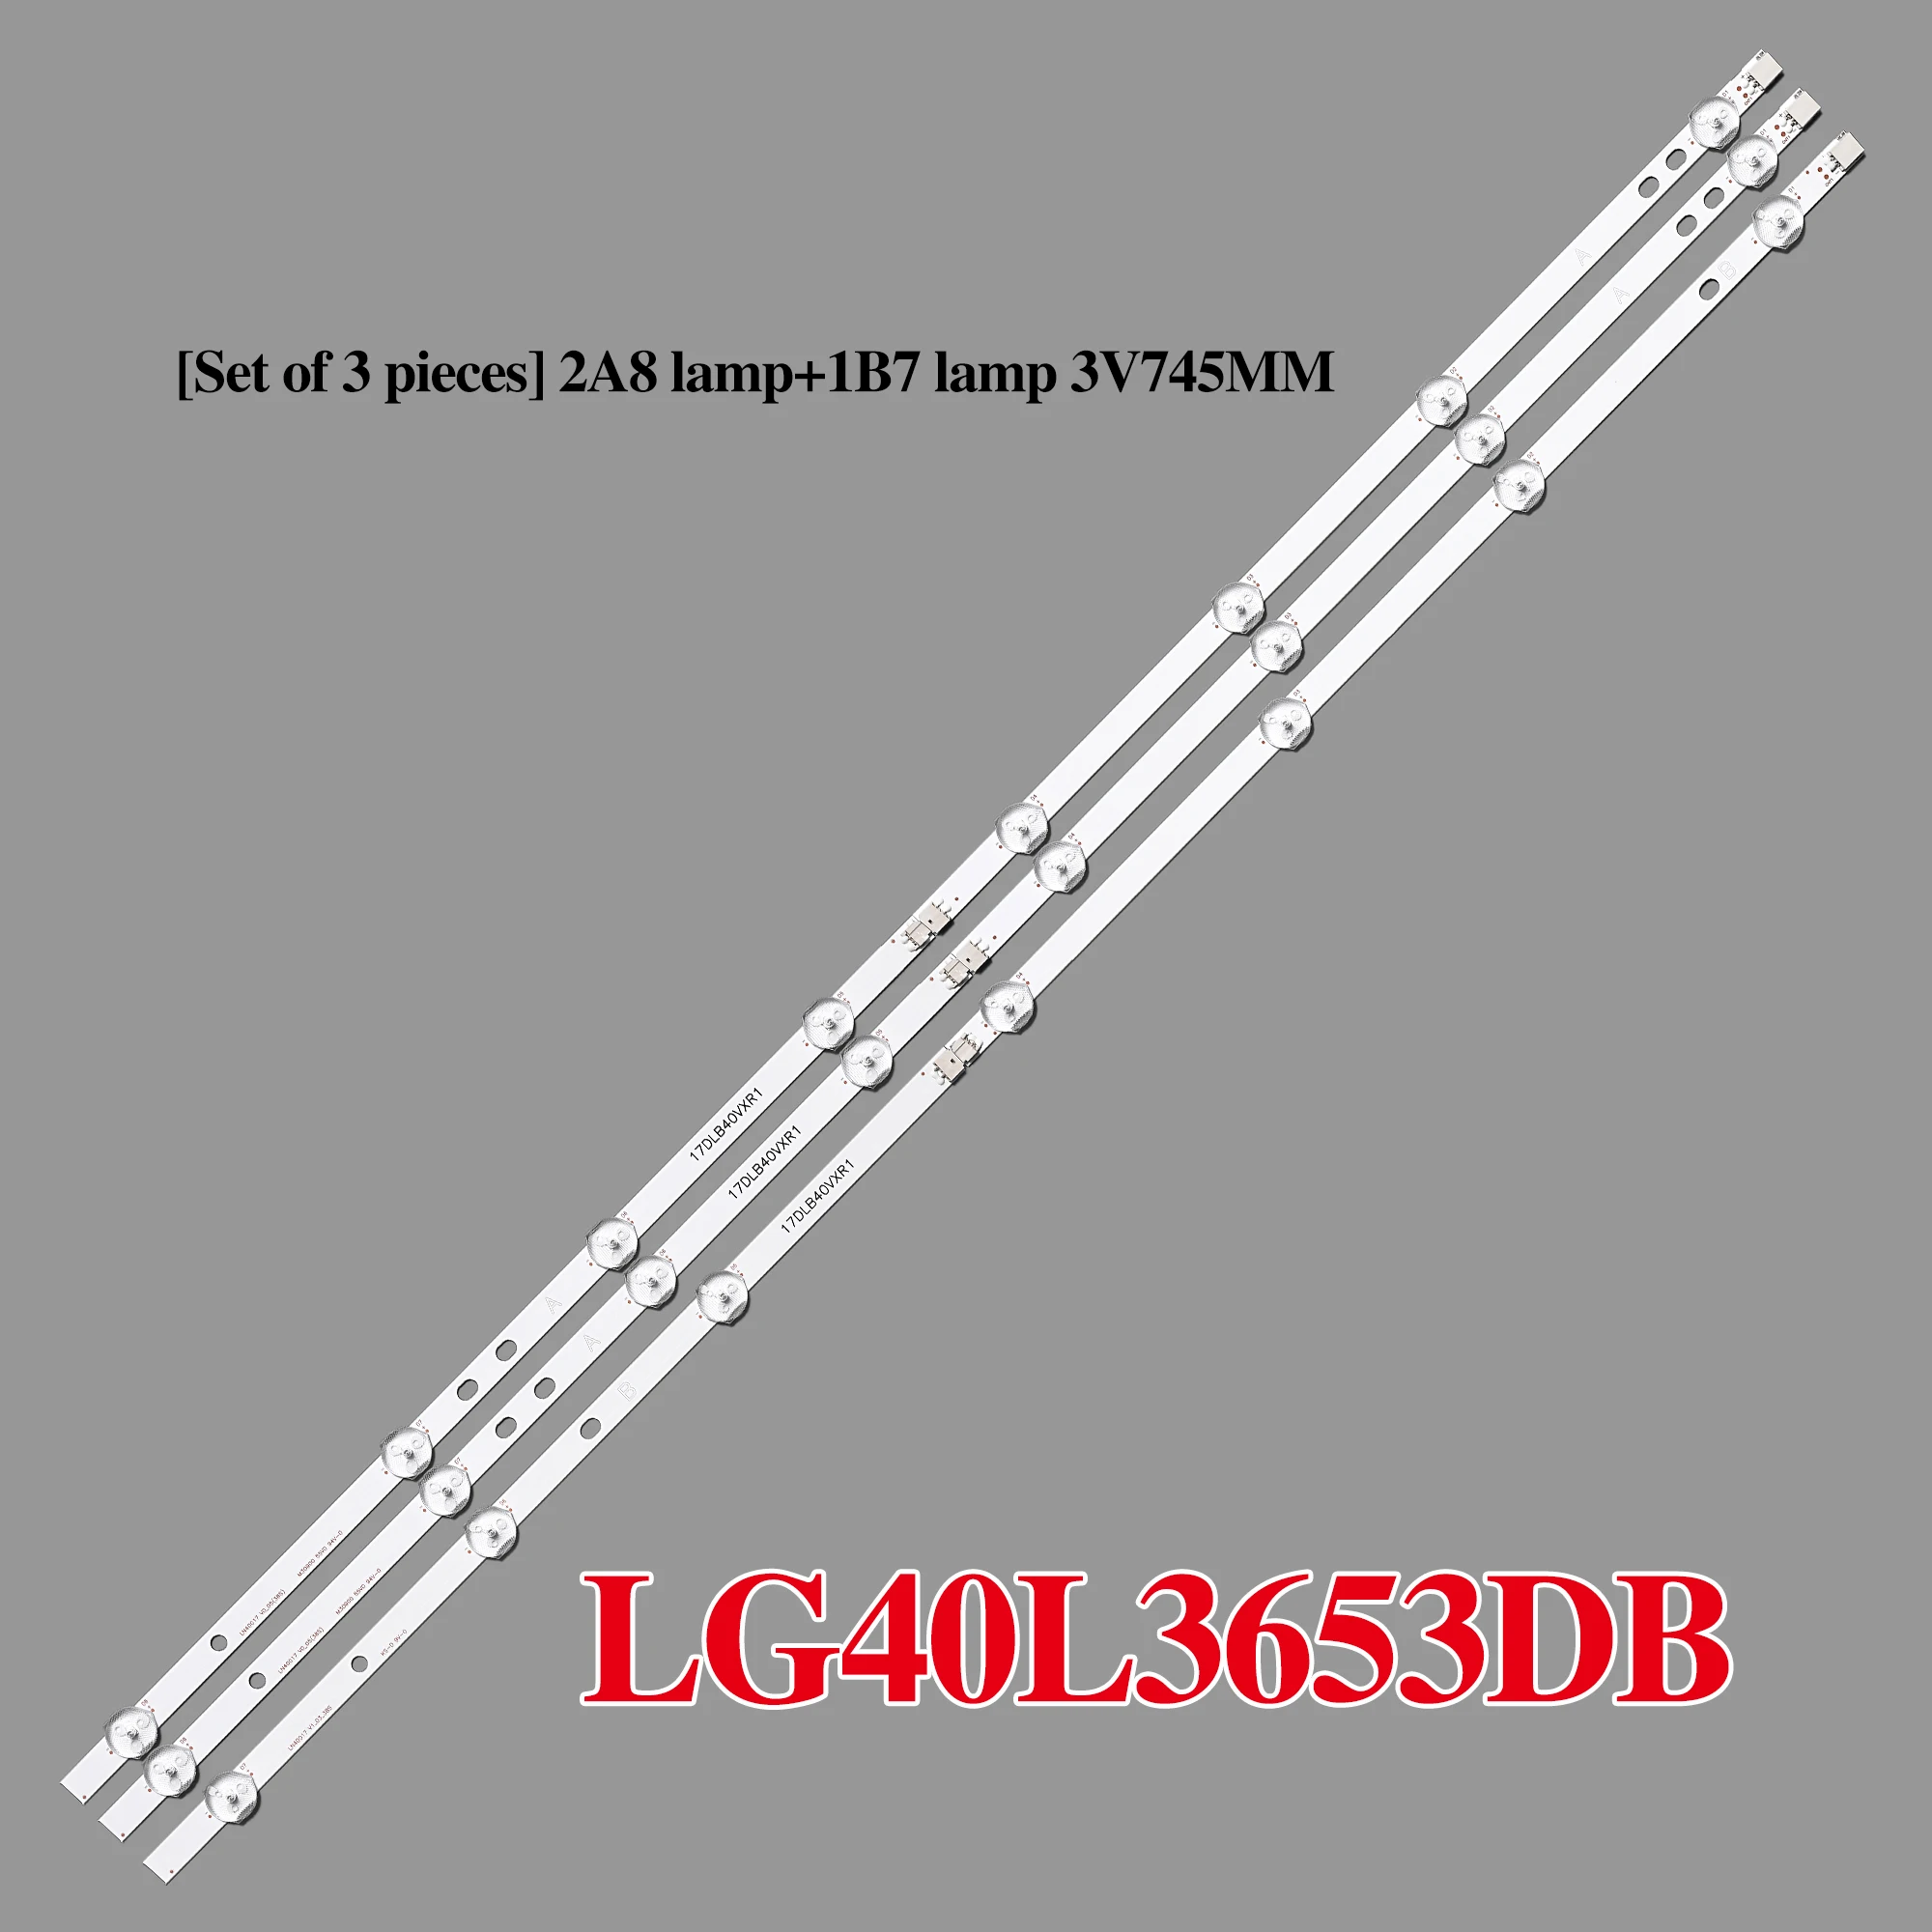 Светодиодная лента для ламп 17 dlb40vxr1 LB40017 V0 _ 05 _ 38s, для стандартной лампы Toshiba 40L3653DB 40L1653DB, 3 шт.